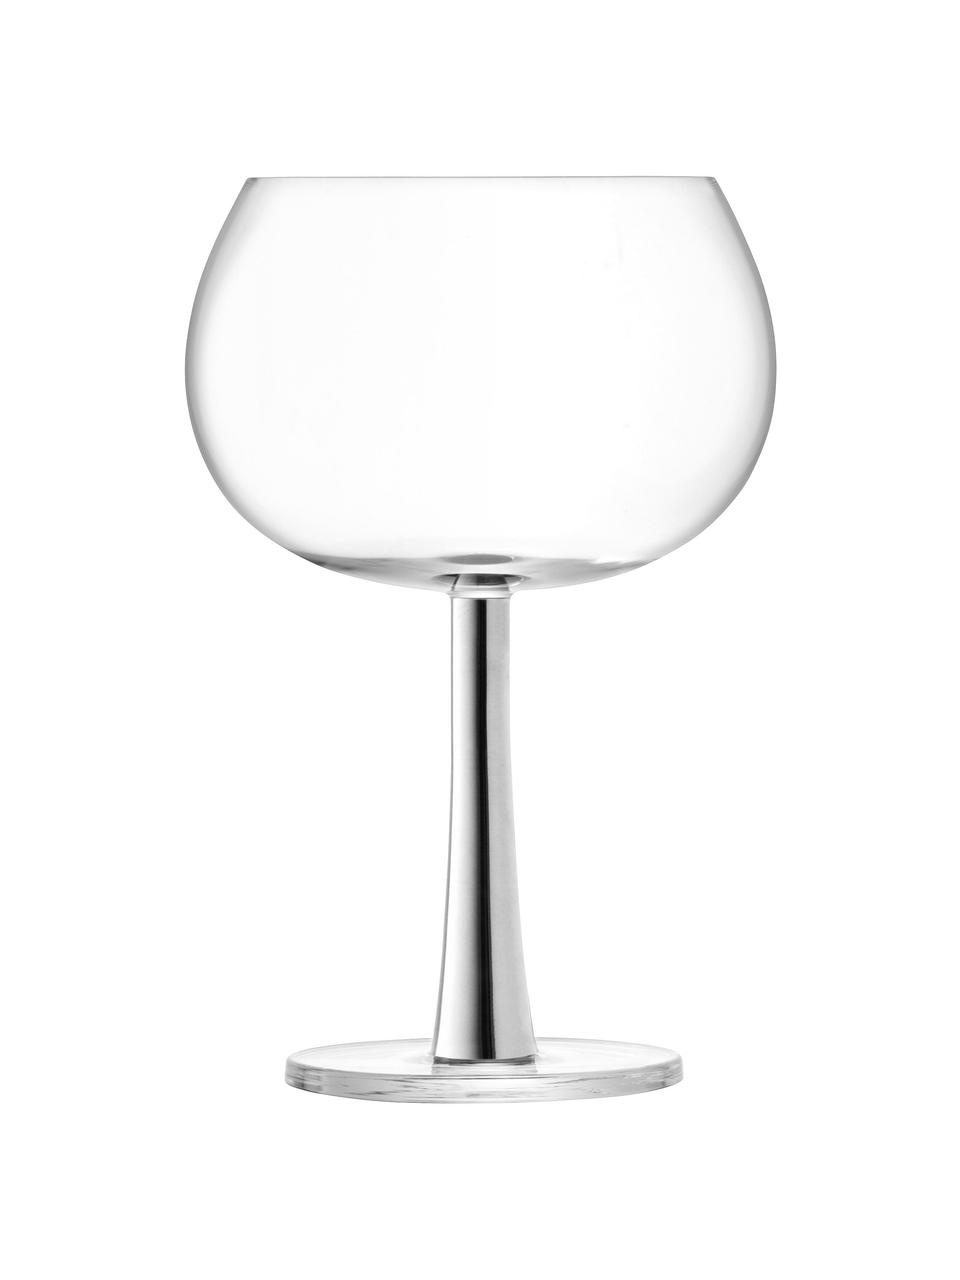 Bicchiere con manico argentato Gina 2 pz, Vetro, Trasparente, argentato, Ø 11 x Alt. 17 cm, 420 ml